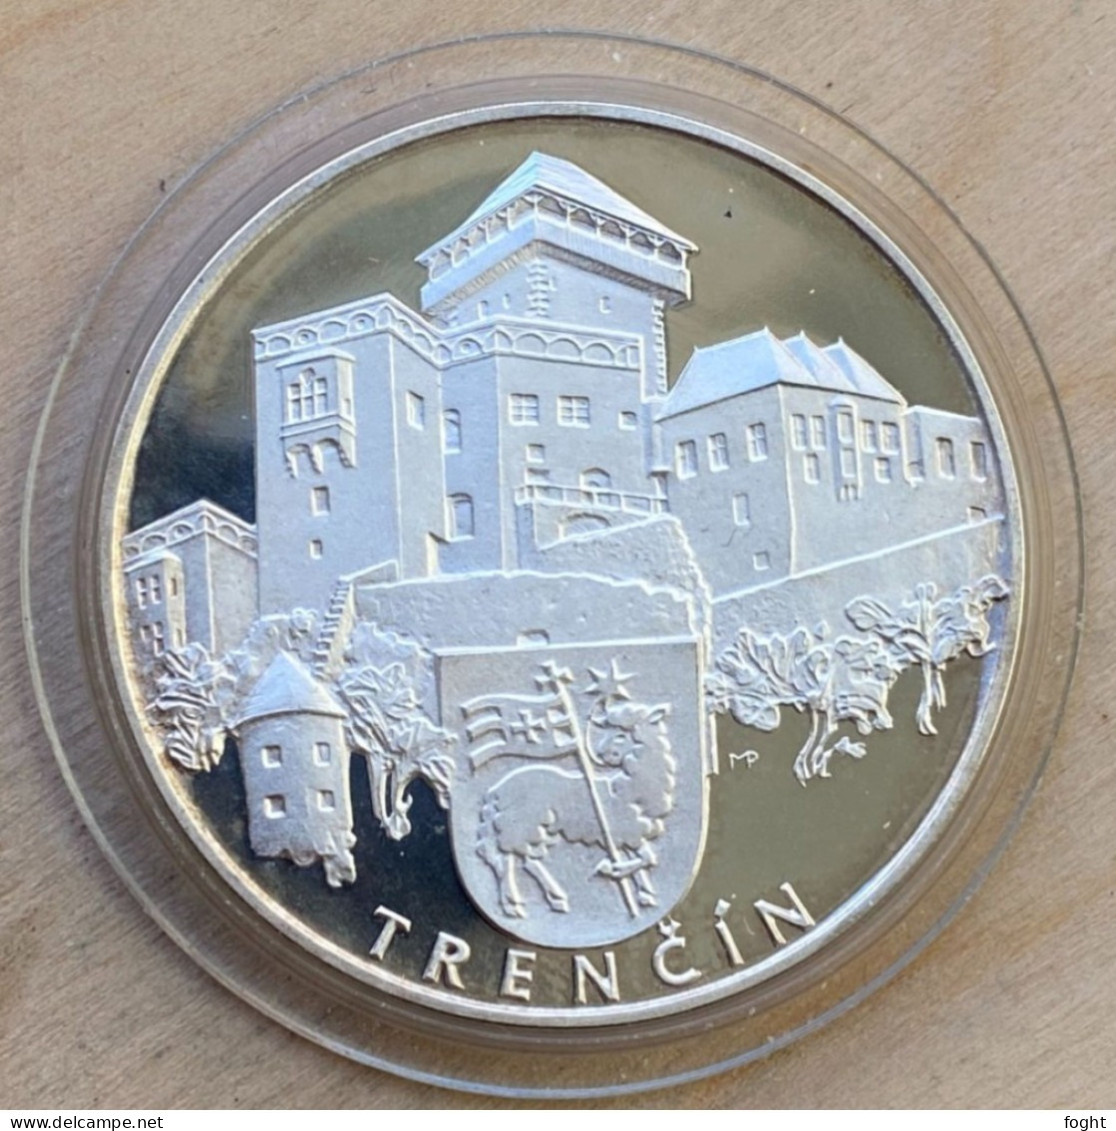 .900 Silver Slovak Souvenir Medal - Slovak Castles: TRENČÍN,6477 - Gewerbliche